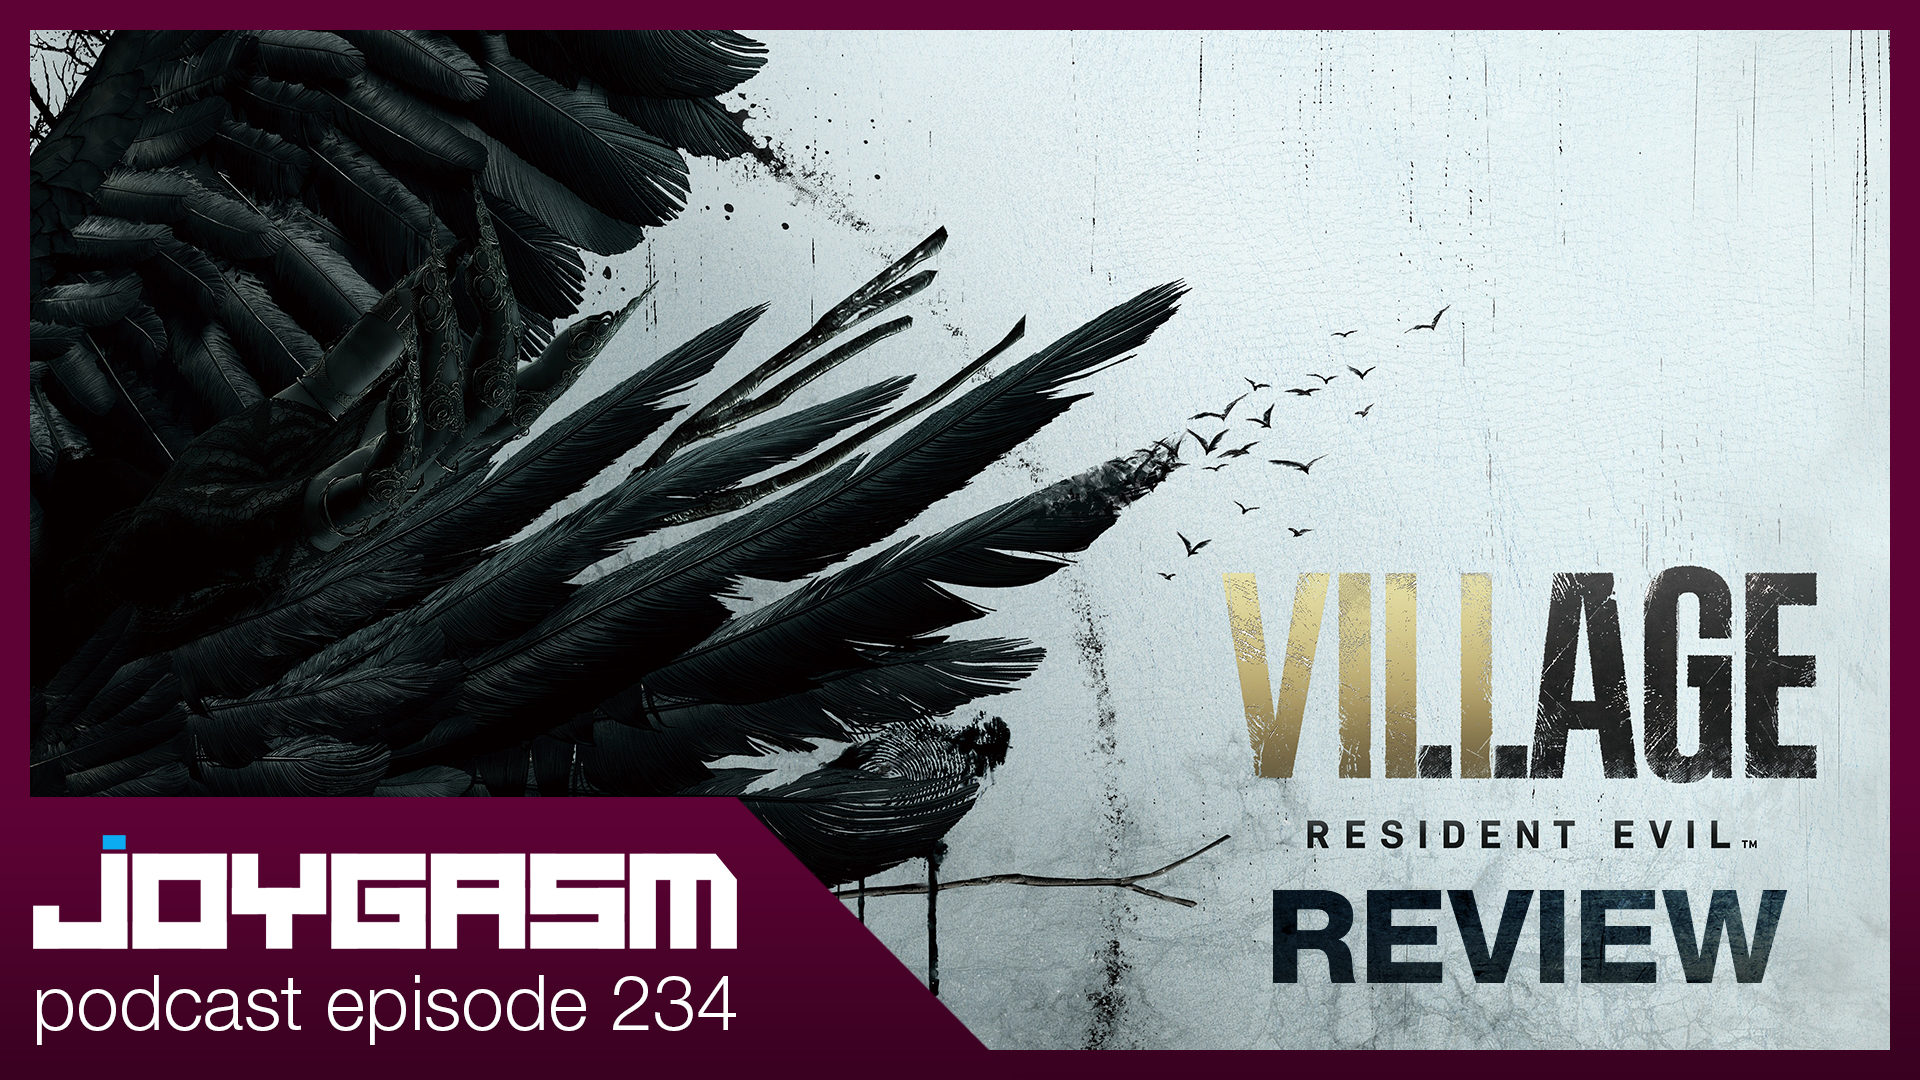 Ep. 234: Resident Evil Village Review